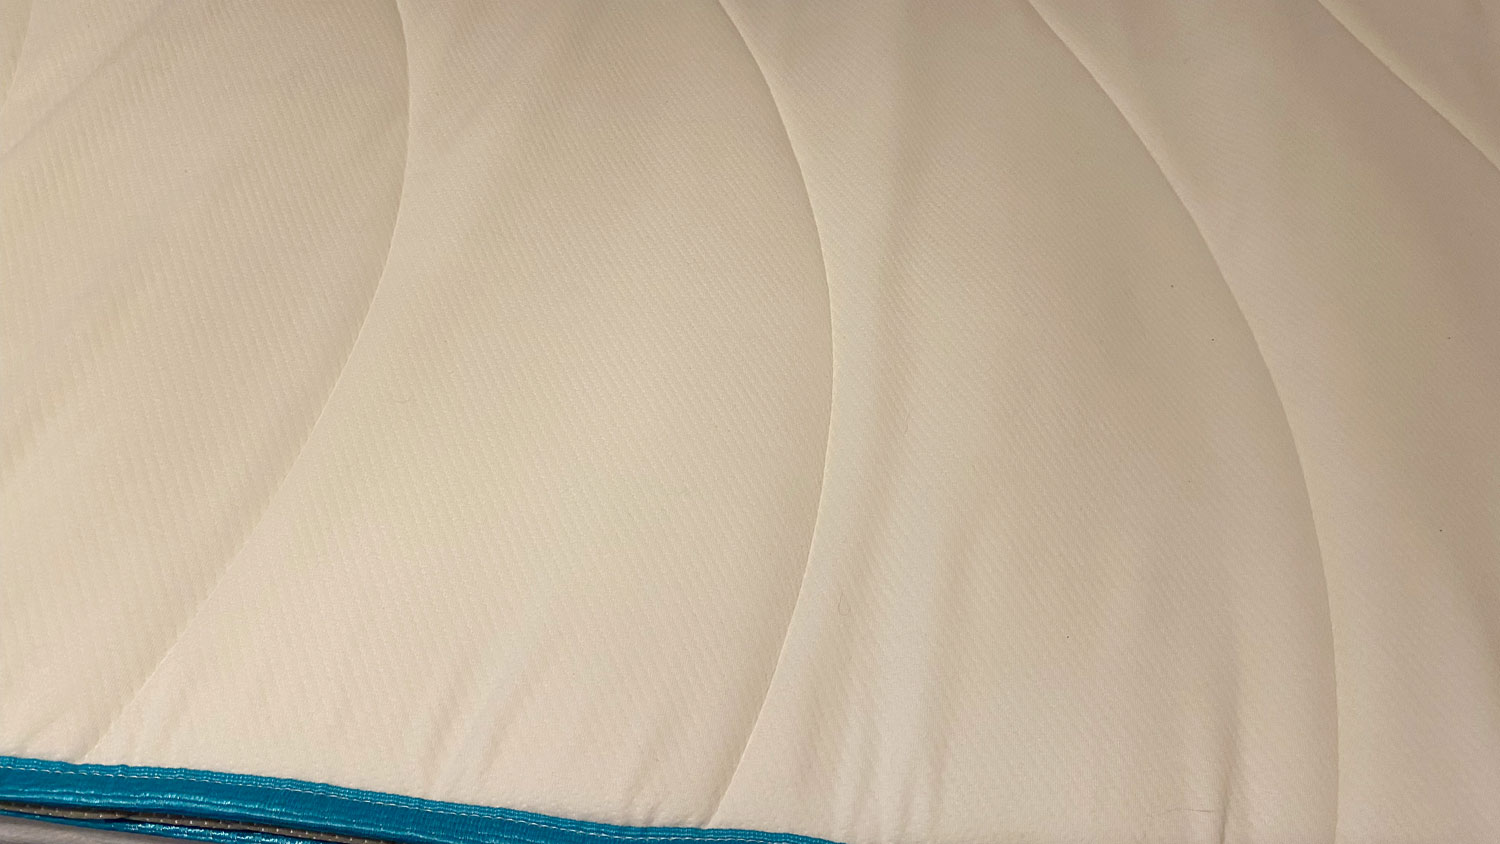 Close-up shot of the Linenspa Memory Foam Hybrid mattress